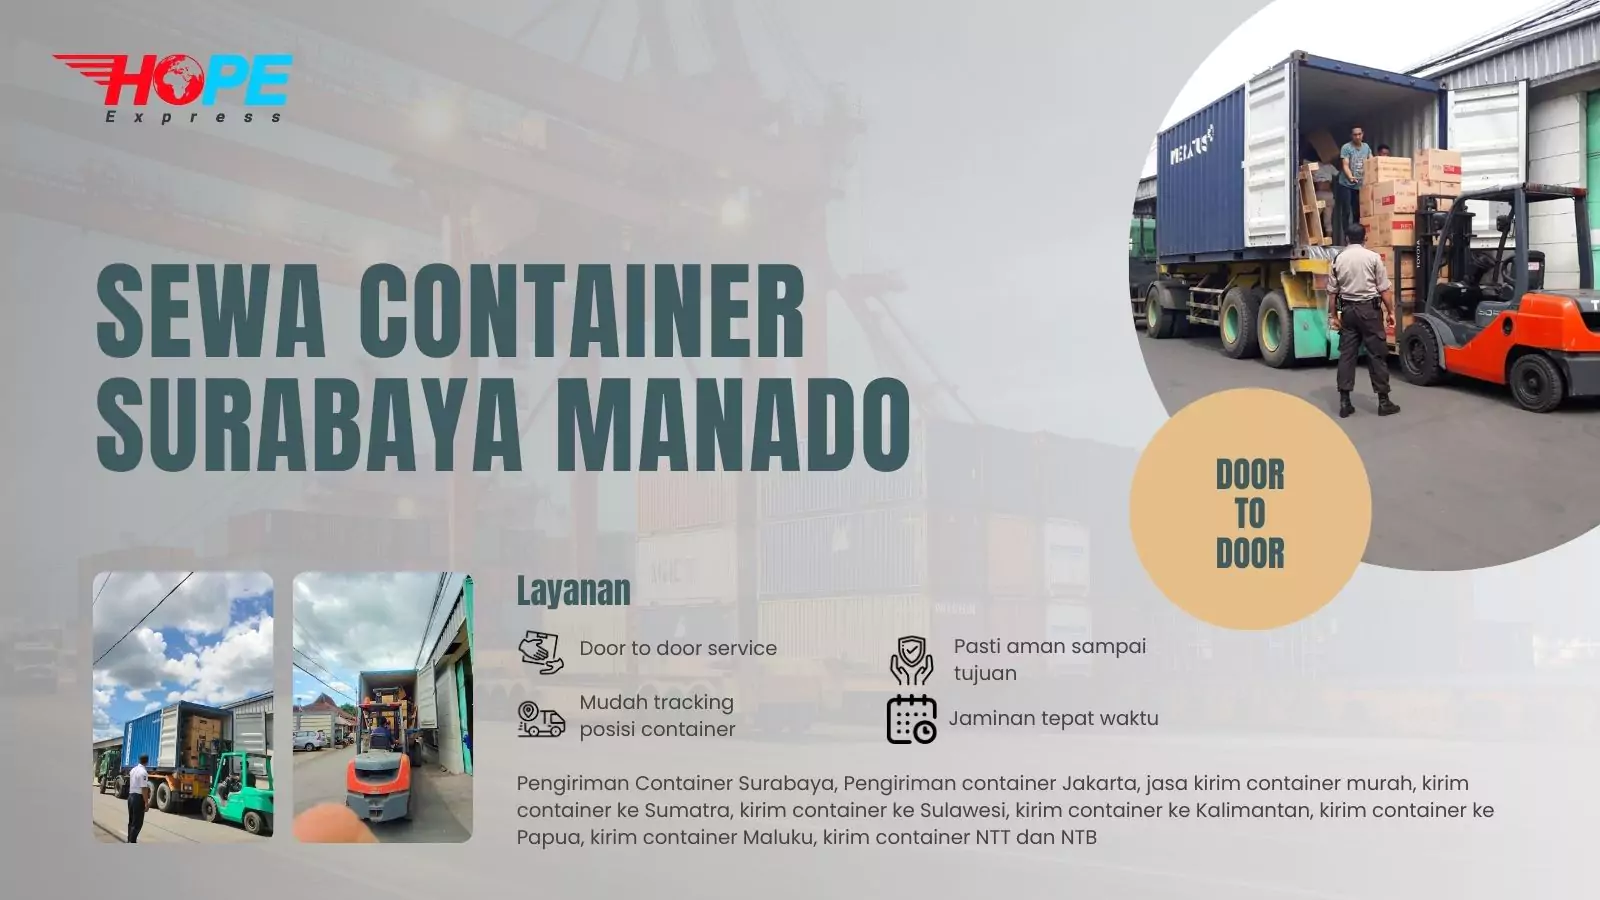 Sewa Container Surabaya Manado